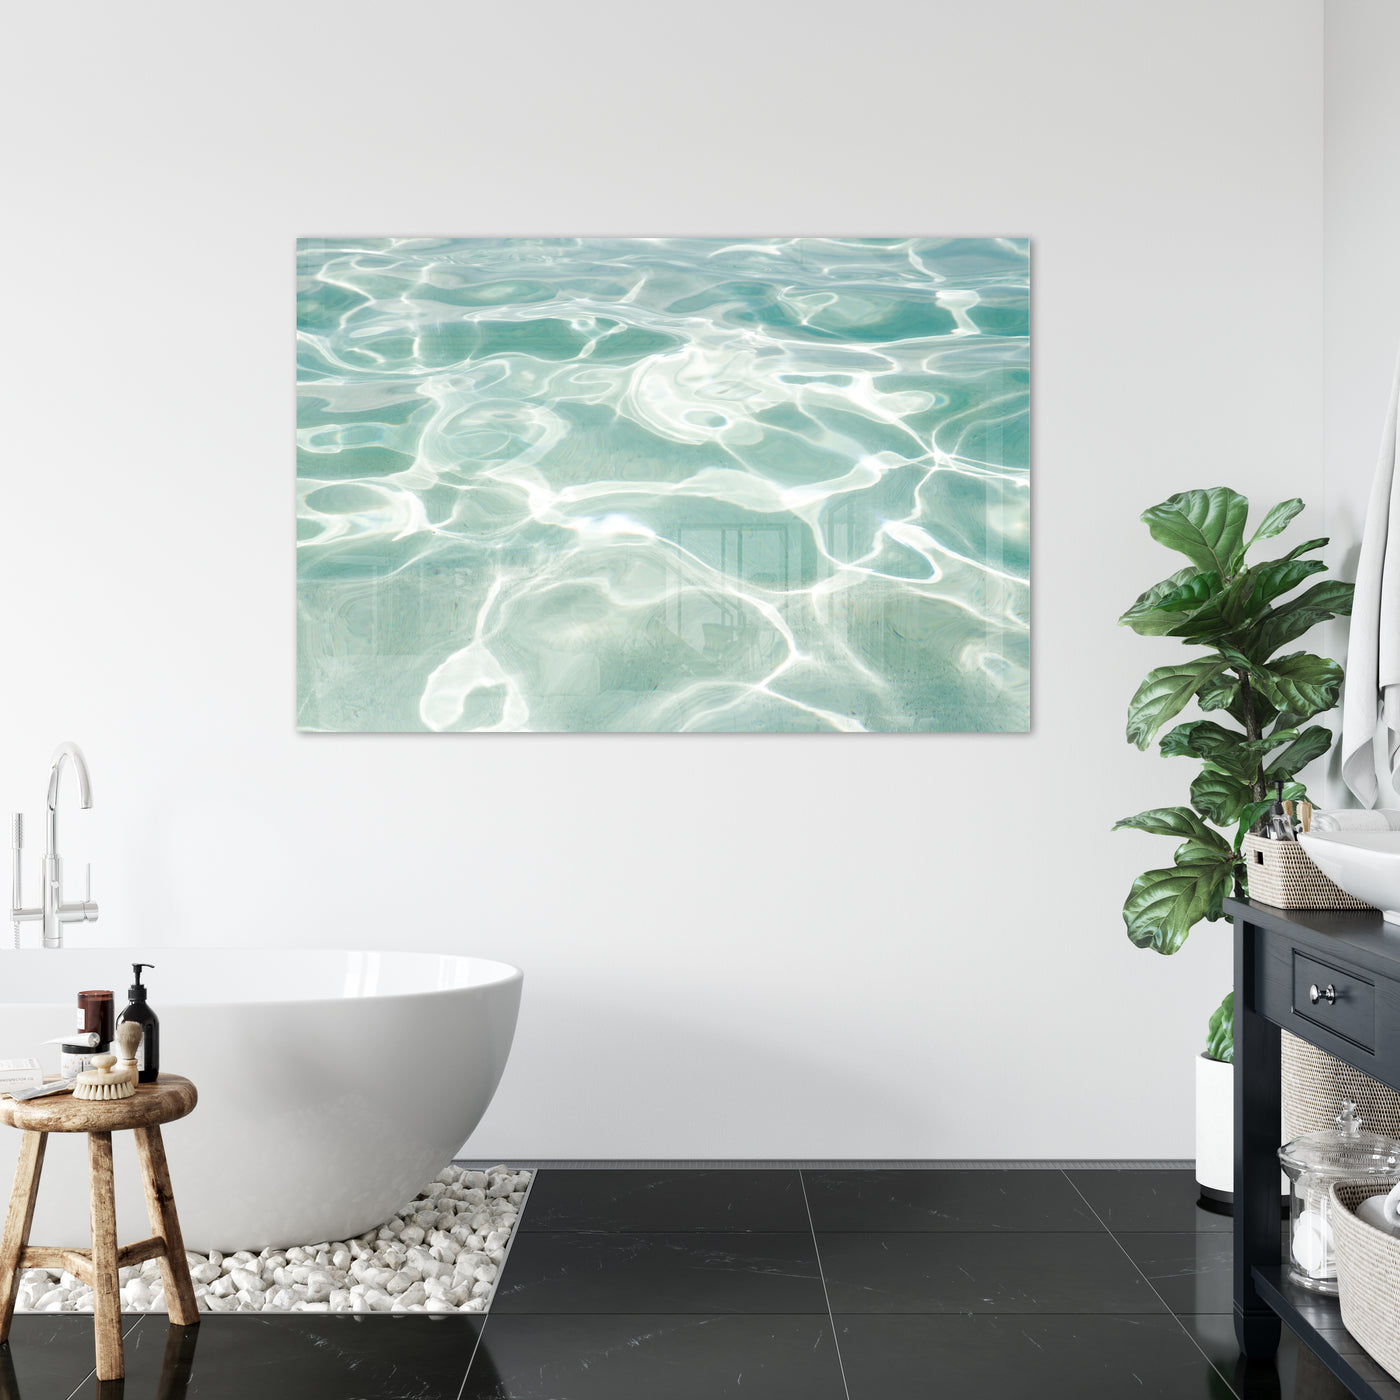 Caribbean Sea - Acrylic glass art print by Cattie Coyle Photography in bathroom